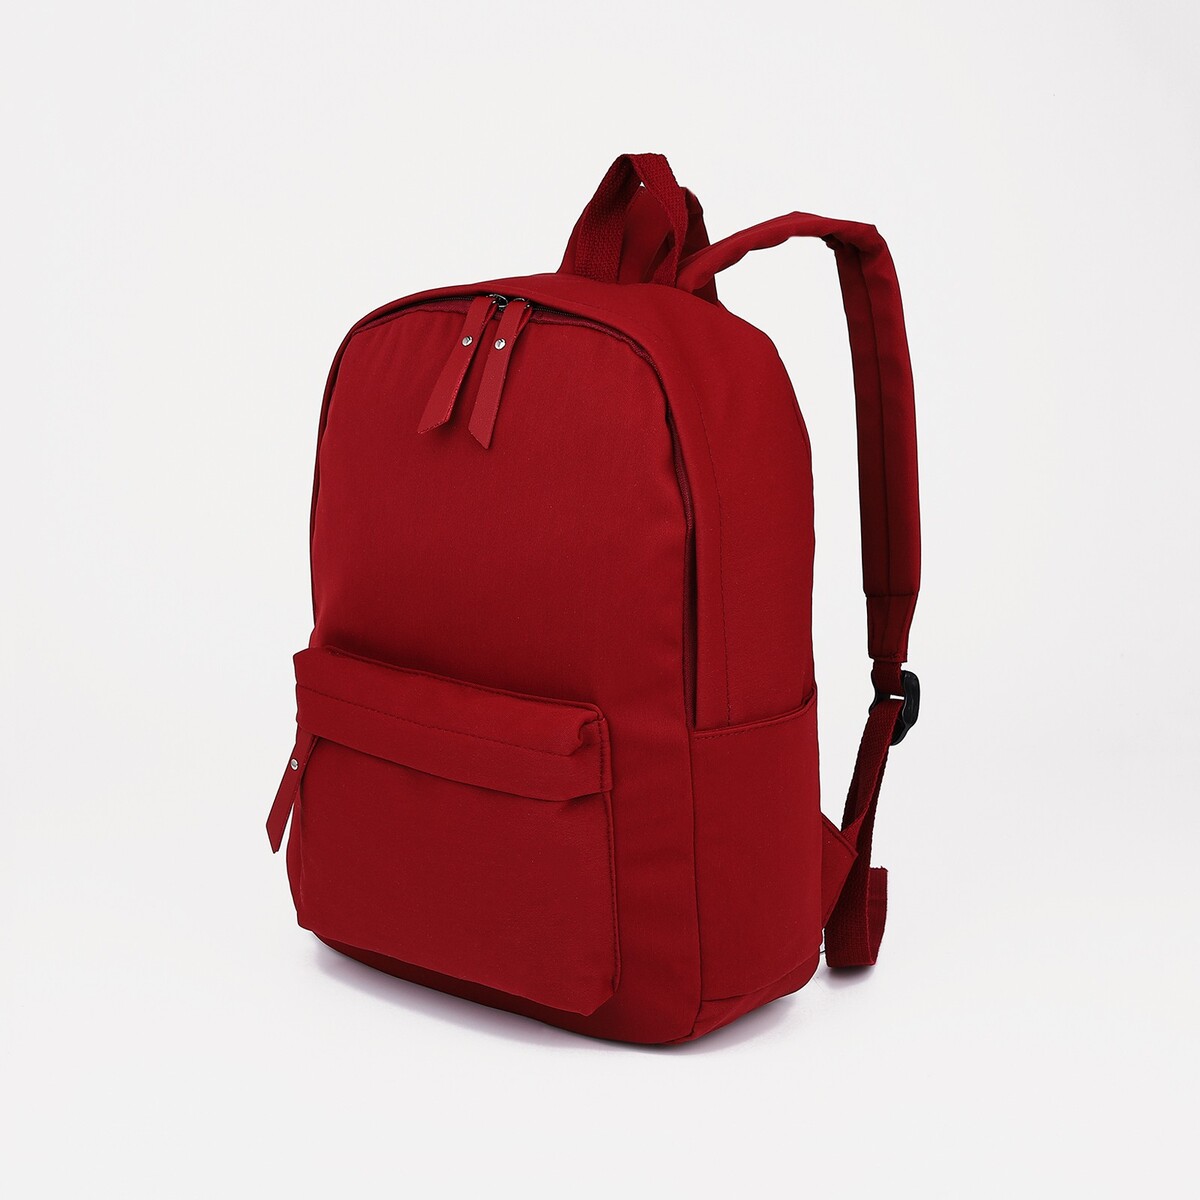 Рюкзак молодежный из текстиля, 4 кармана, цвет бордовый рюкзак молодежный из текстиля 2 отдела 2 кармана бордовый